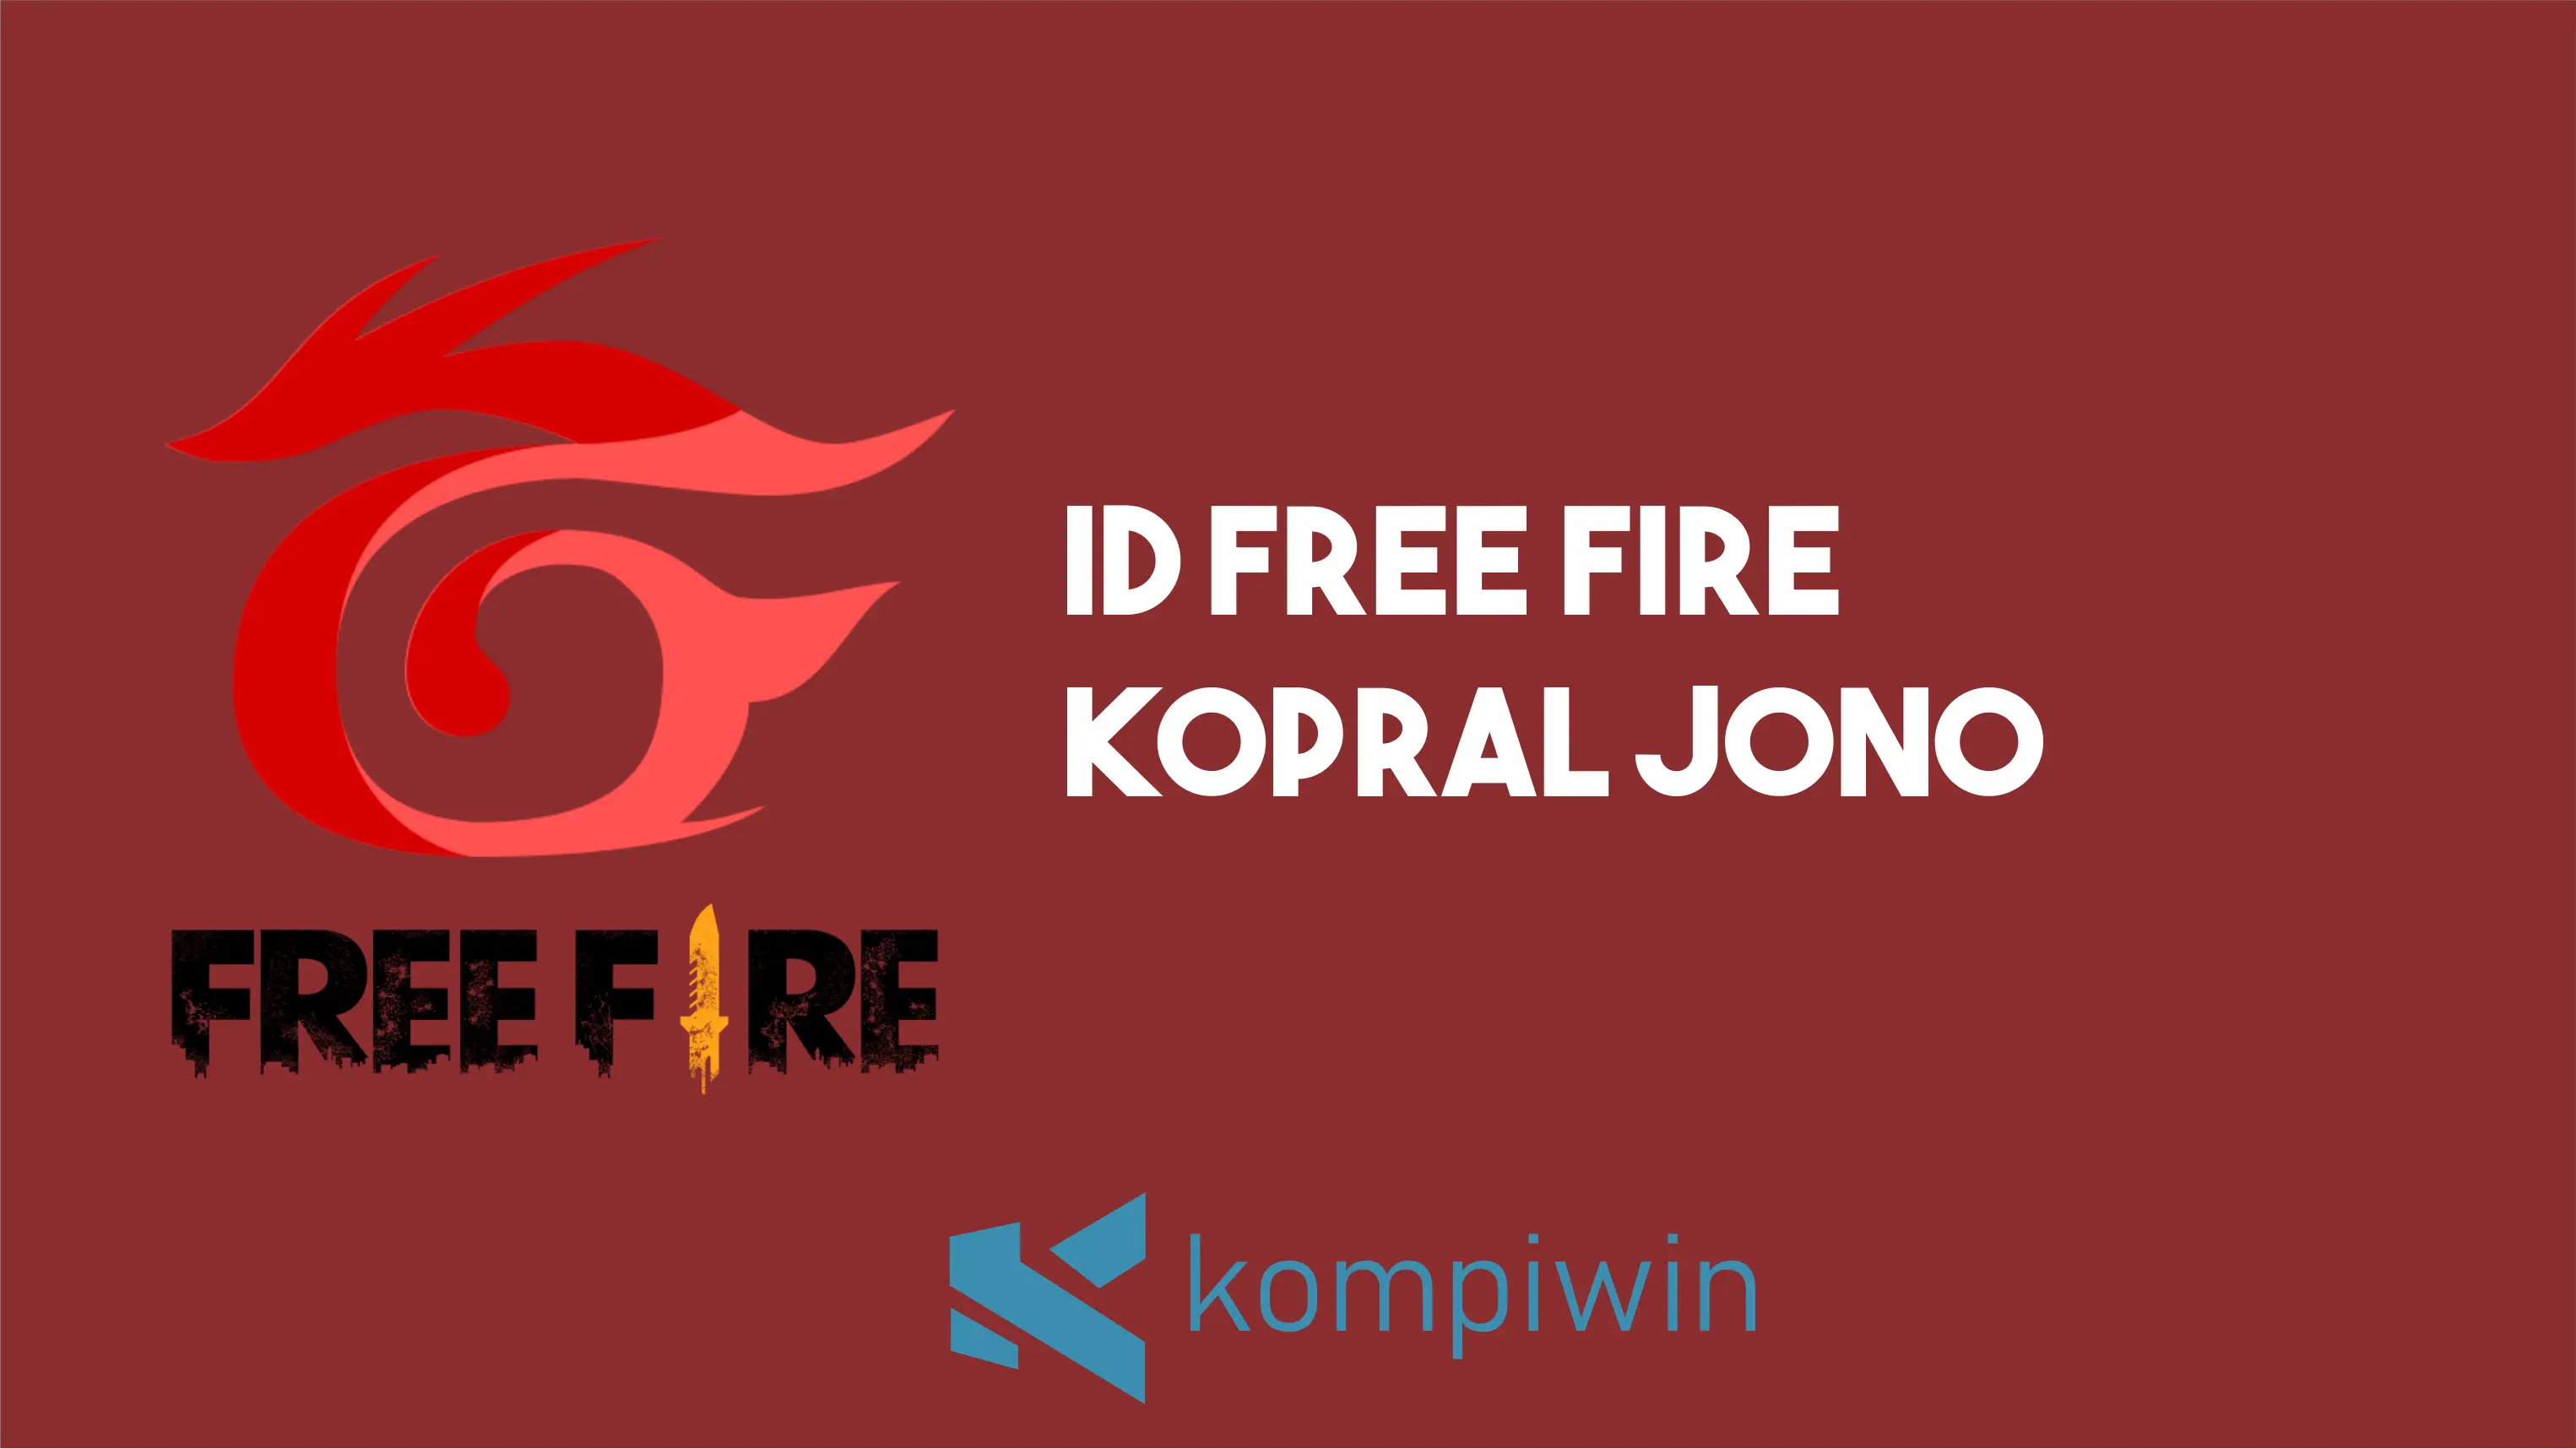 ID Free Fire Kopral Jono Yang Asli (Hanya Disini) 1